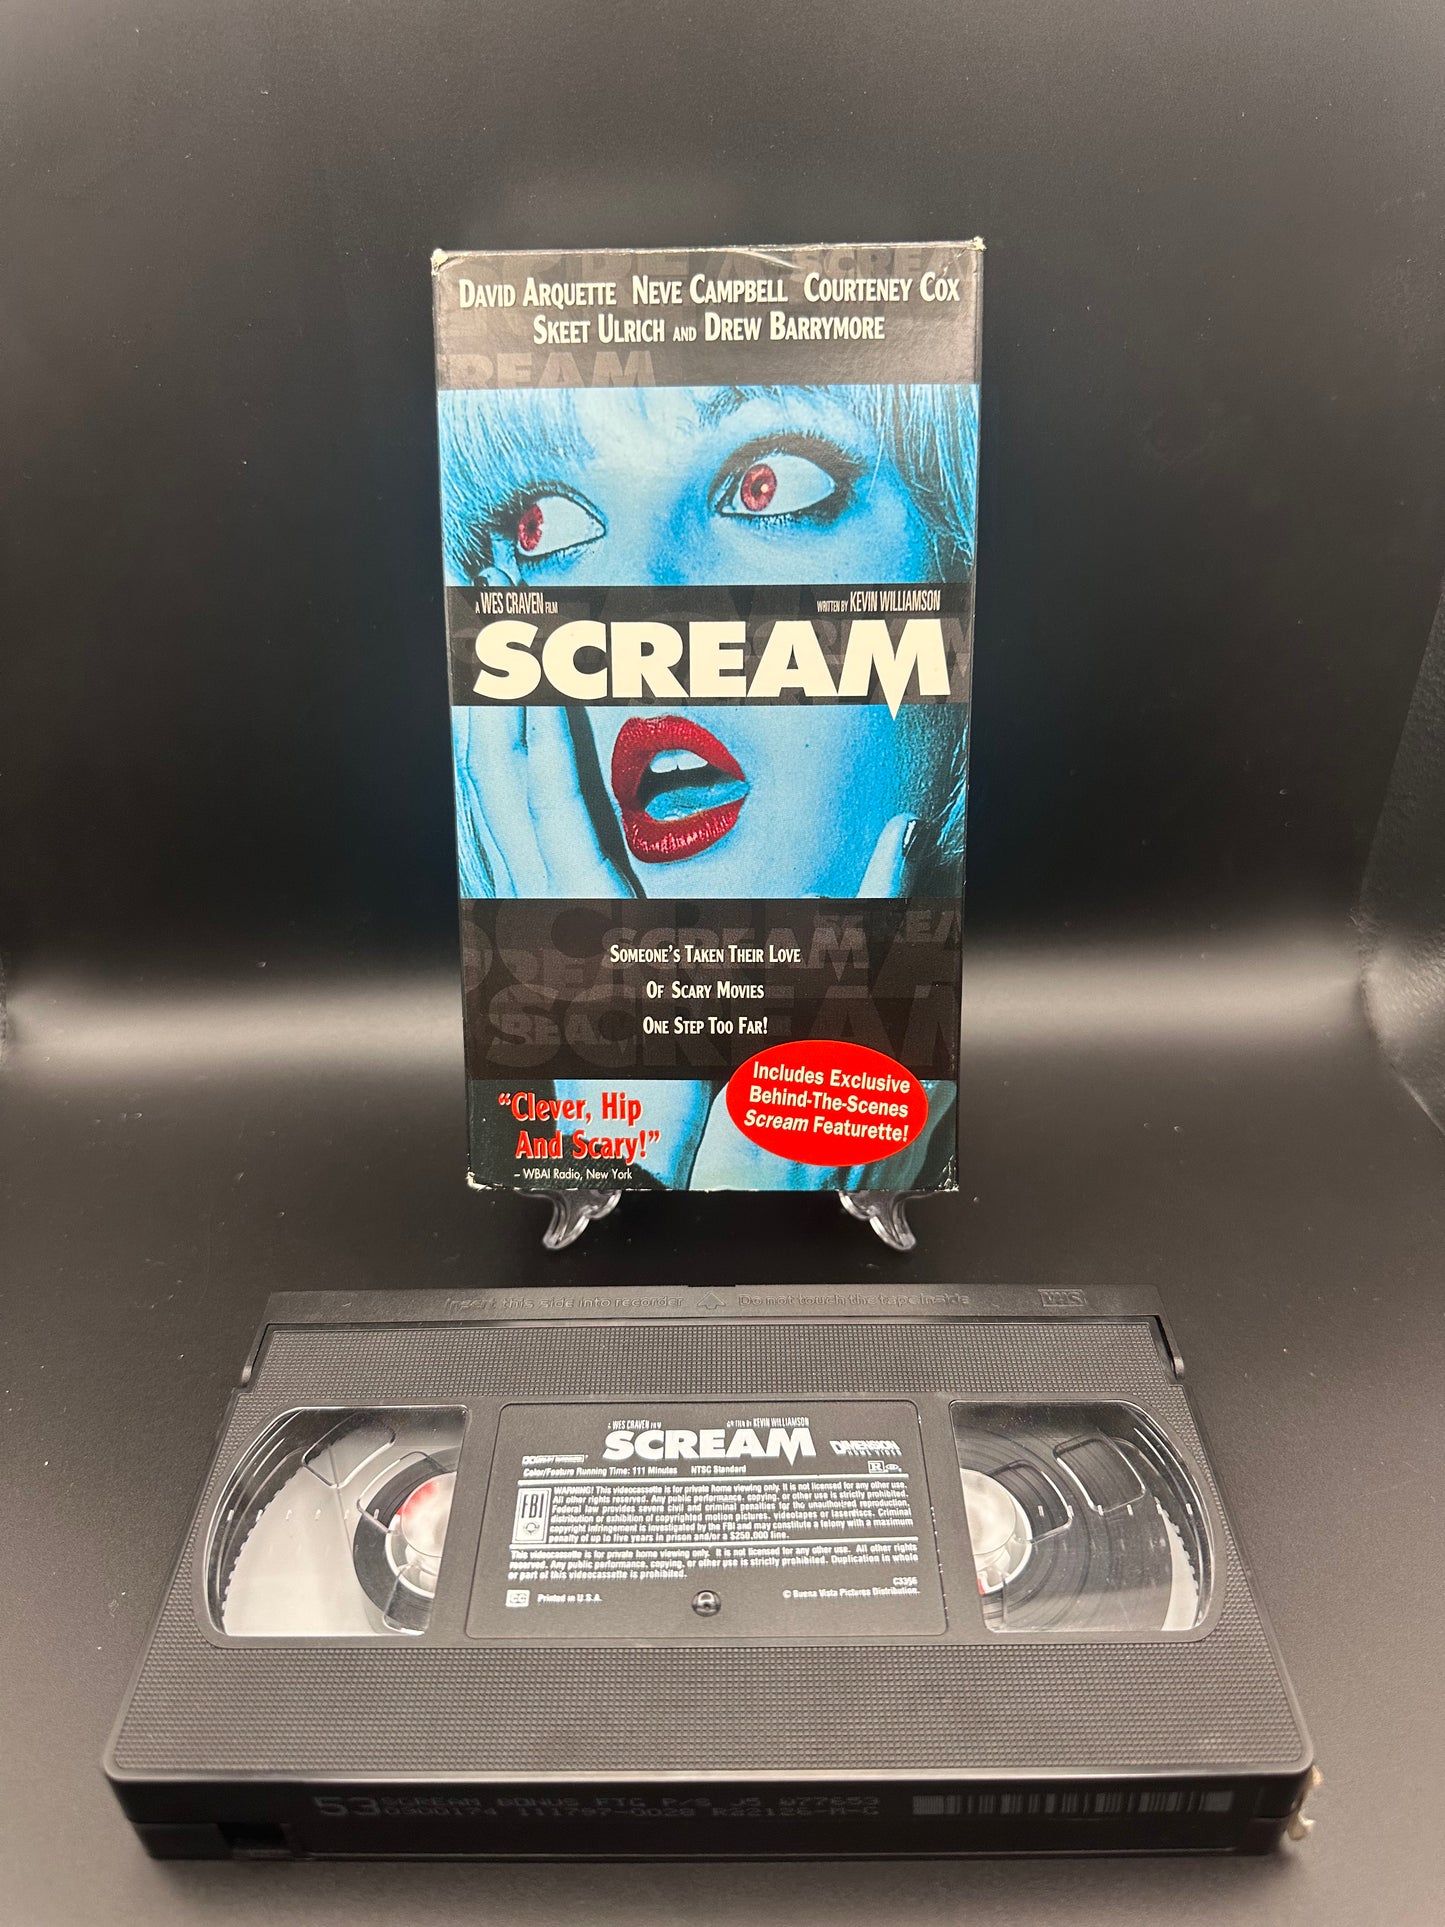 Scream (Drew Barrymore Variant)